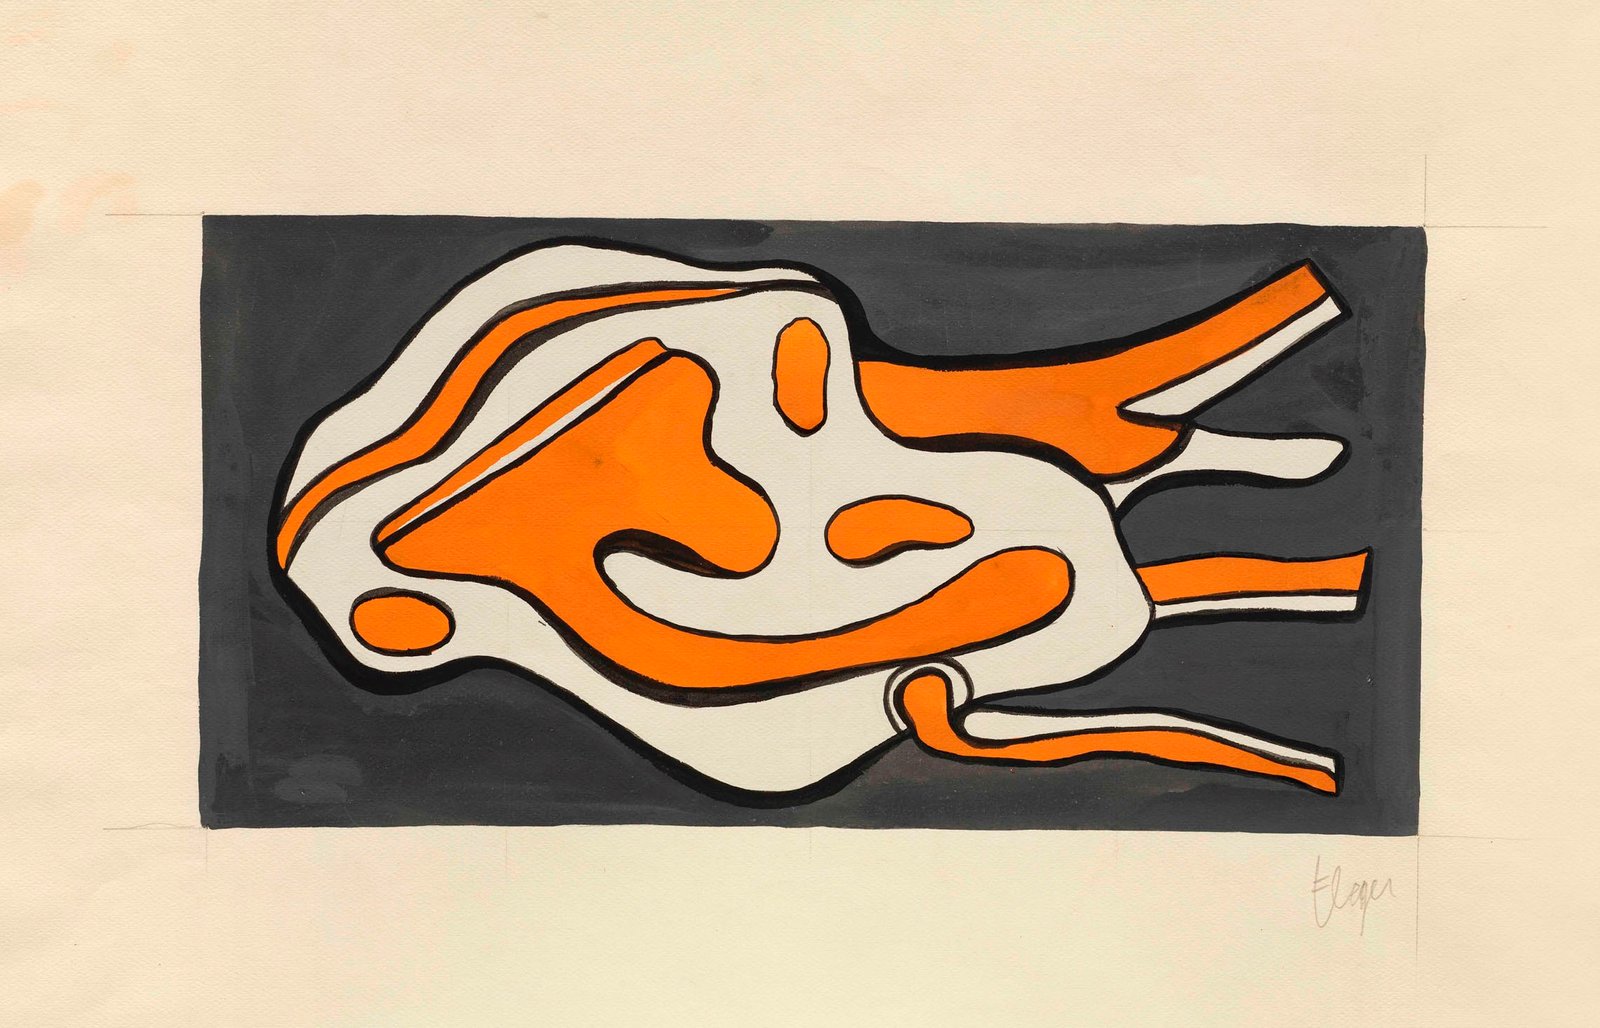 ONU (estudio),por Fernand Léger, 1951, gouache sobre papel, 22 x 44 cm, firmado y titulado. 